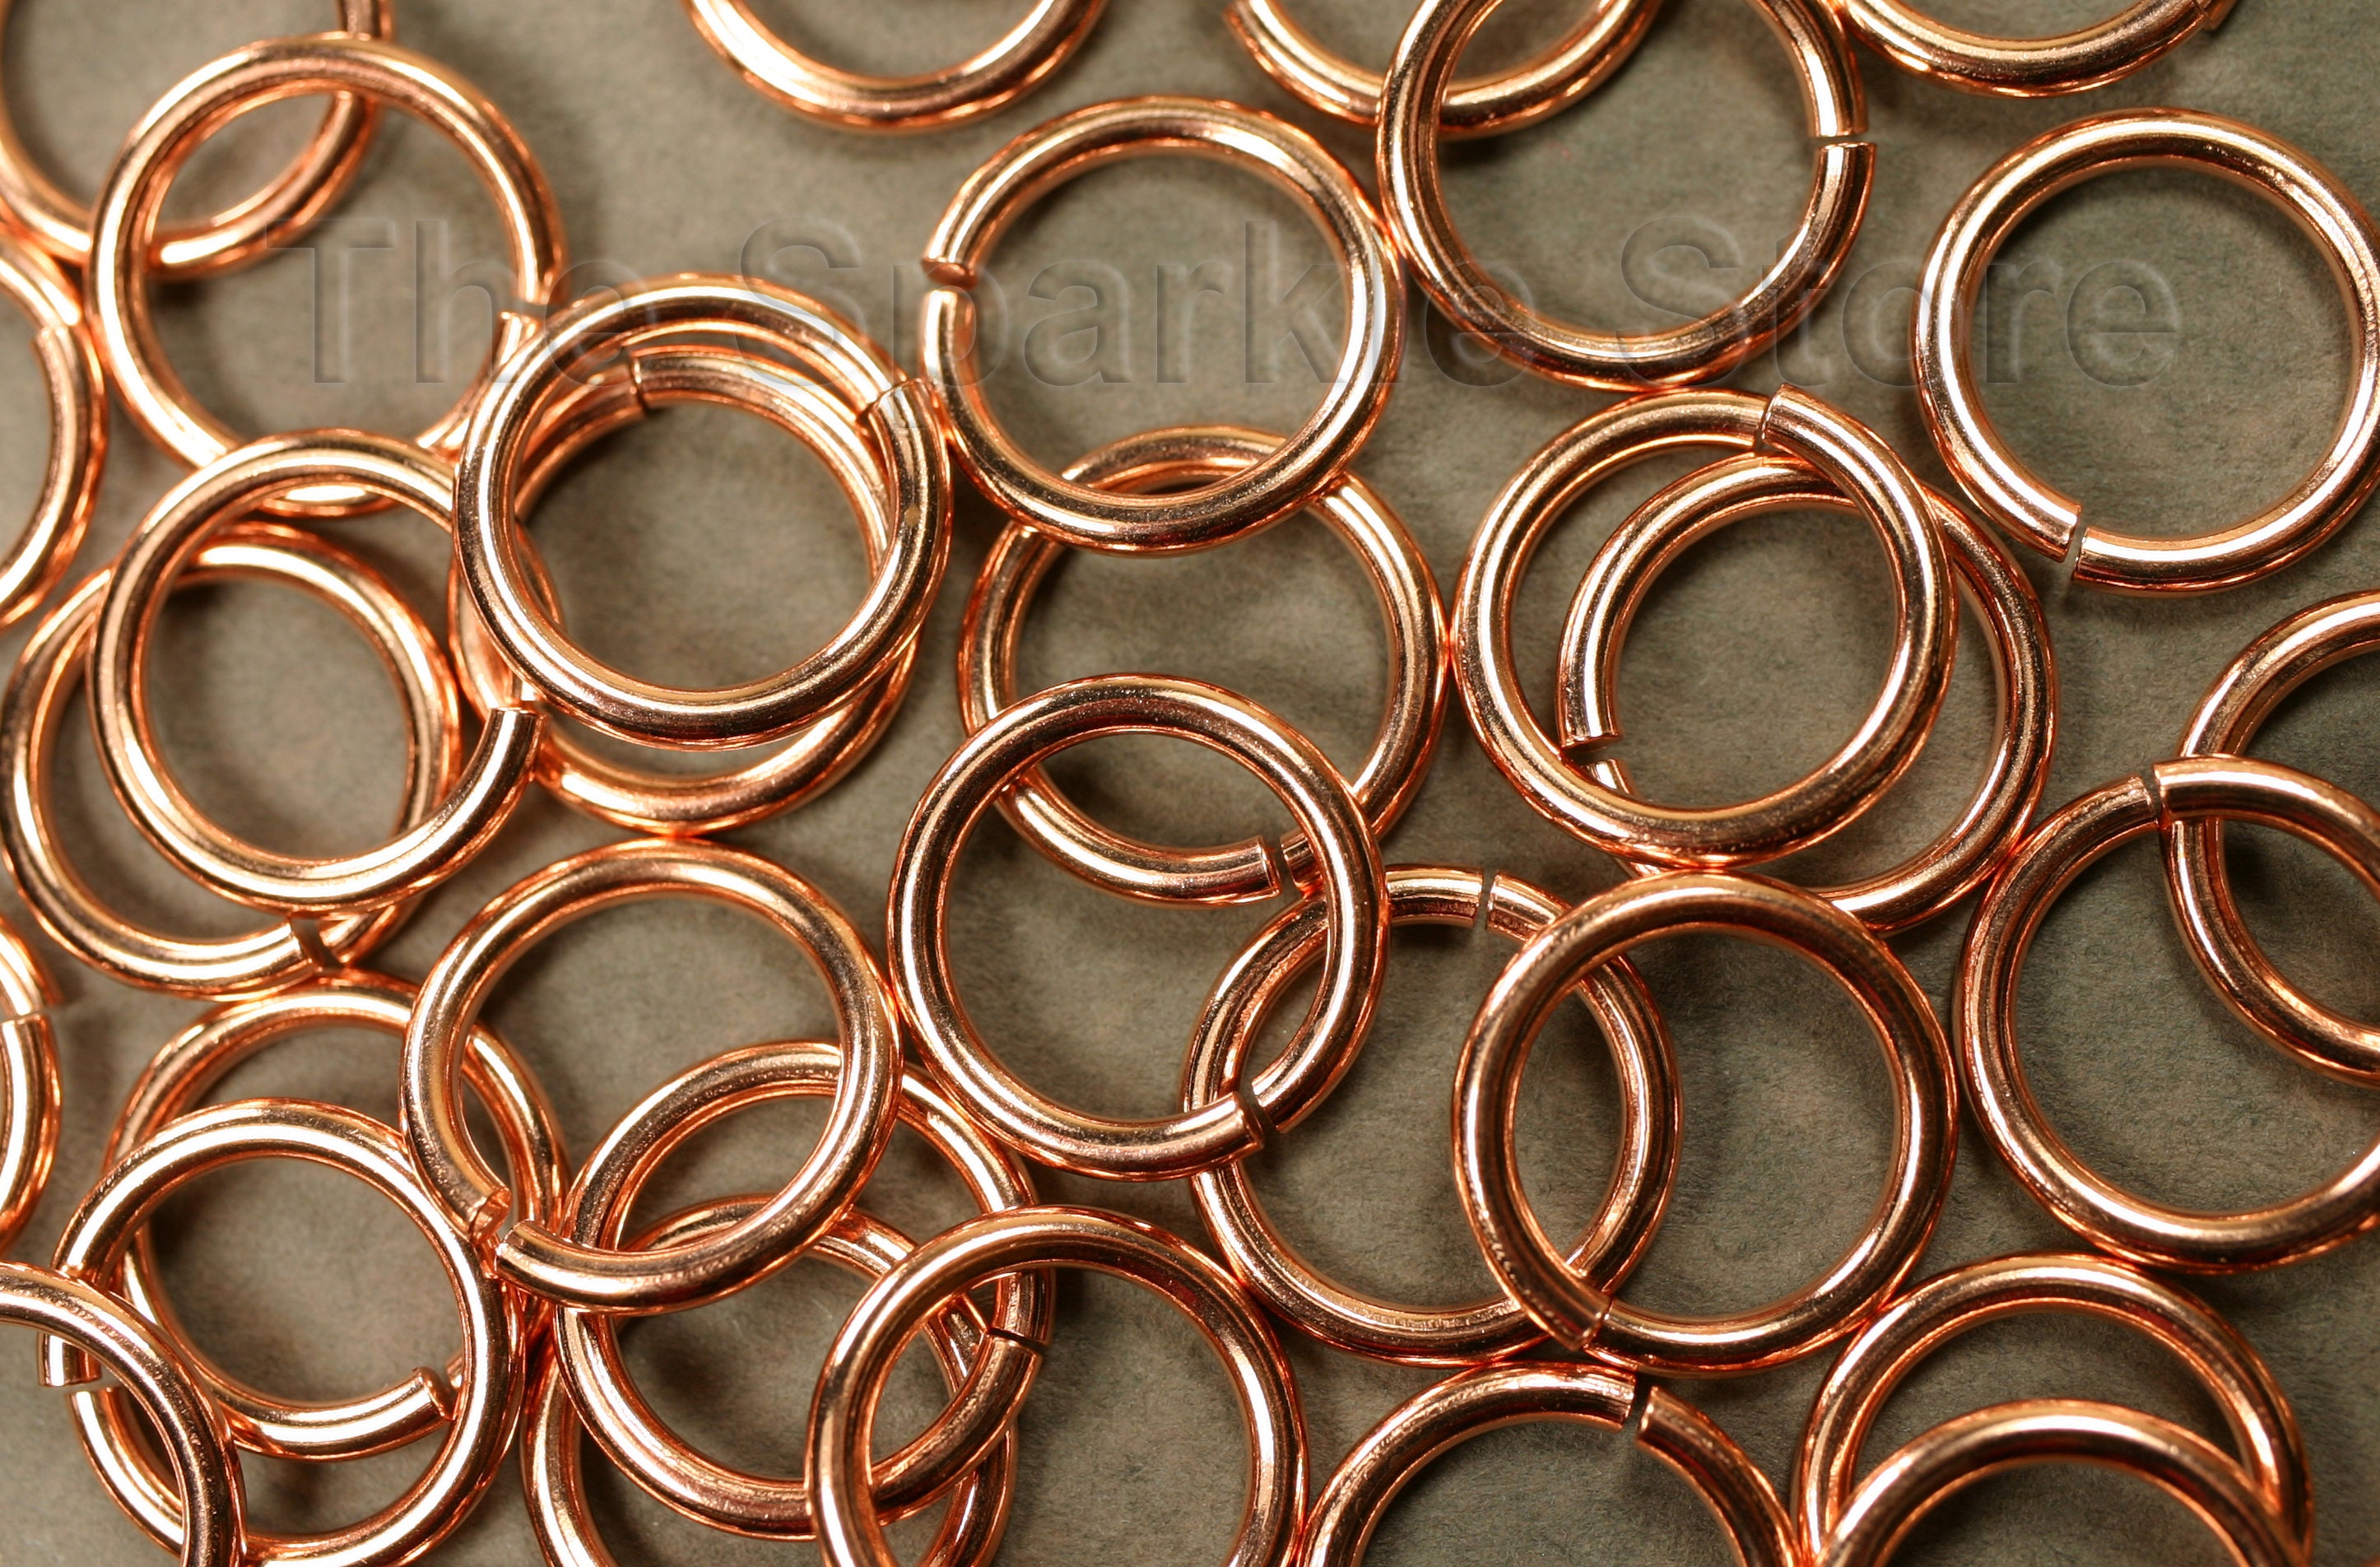 Fine Weight 18 Gauge Copper Jump Rings JSR18 Solid Copper Jewelry